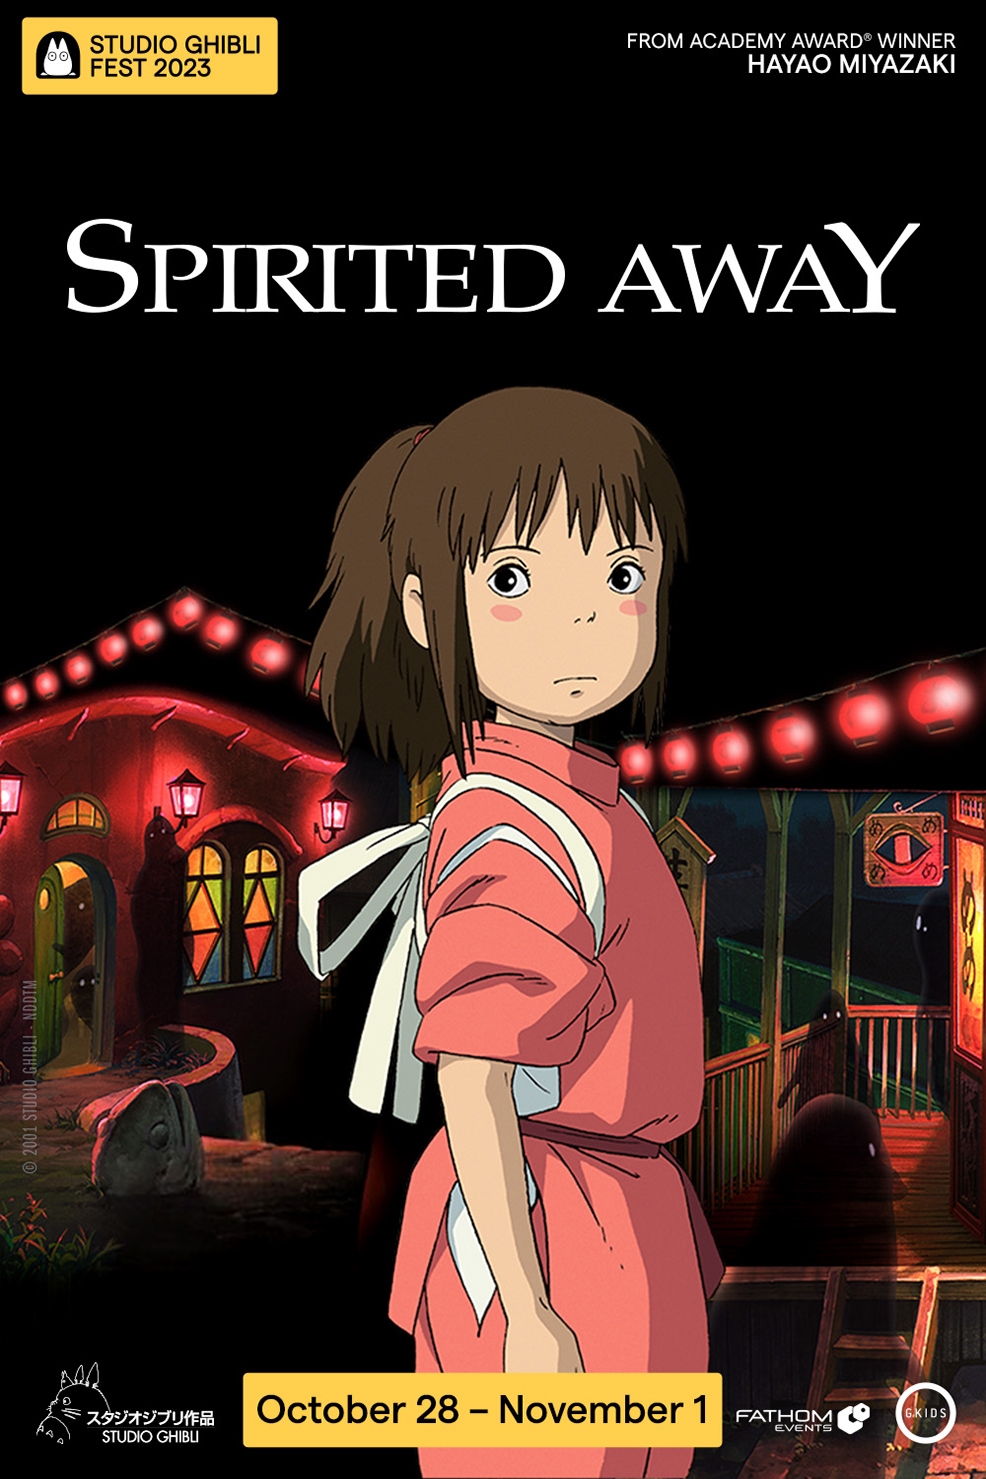 Poster of Spirited Away - Studio Ghibli Fest 2023